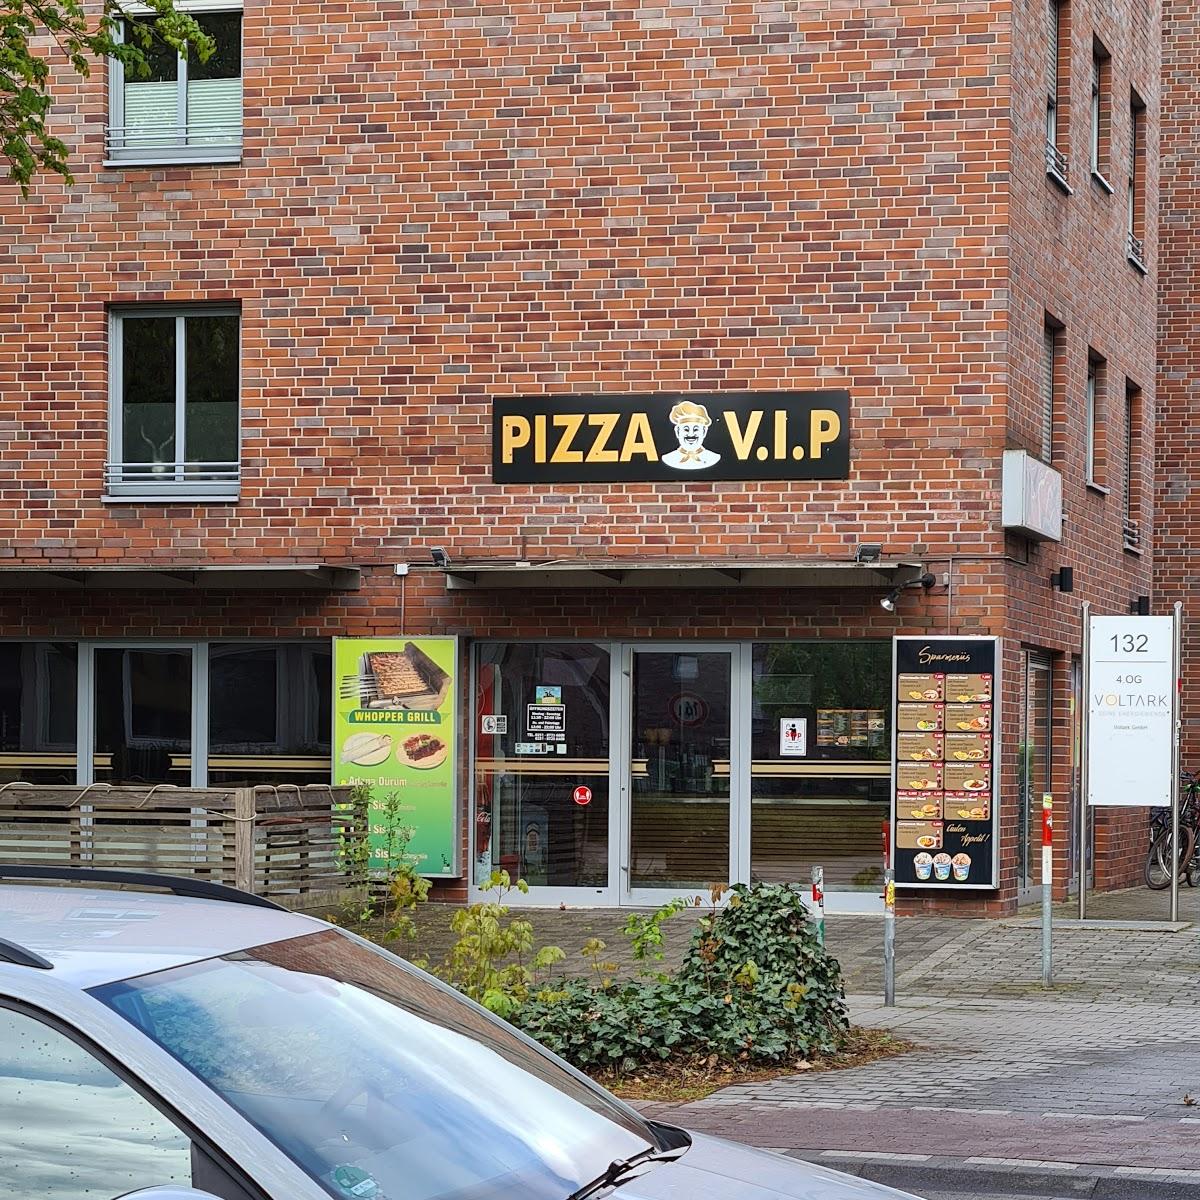 Restaurant "Pizza V.I.P" in Münster